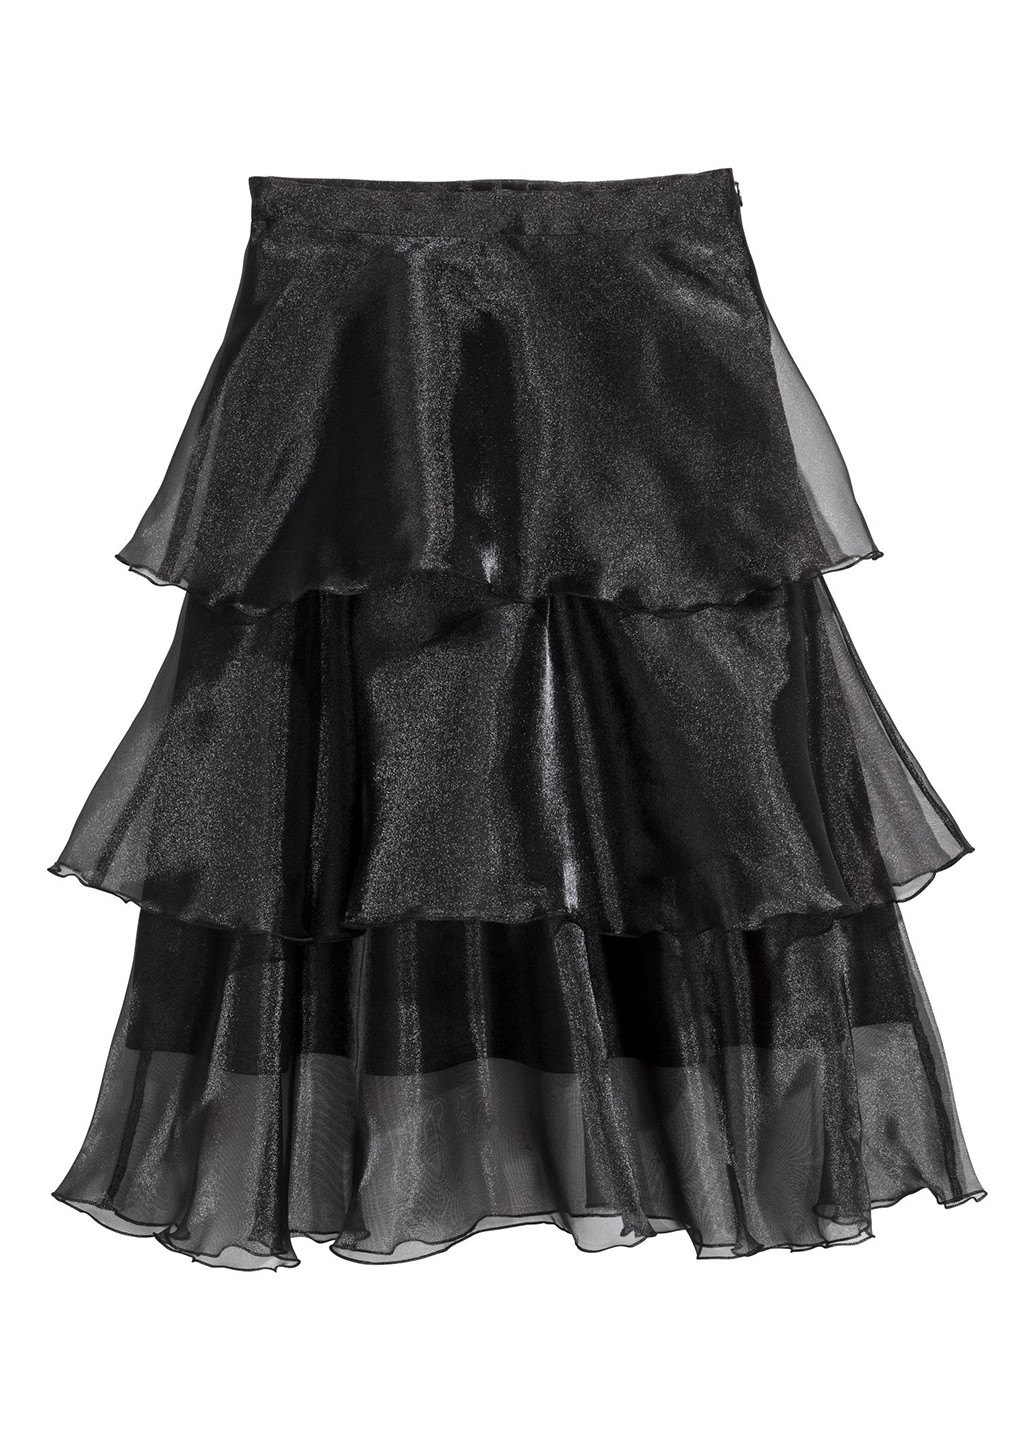 Черная вечерний однотонная юбка H&M а-силуэта (трапеция)